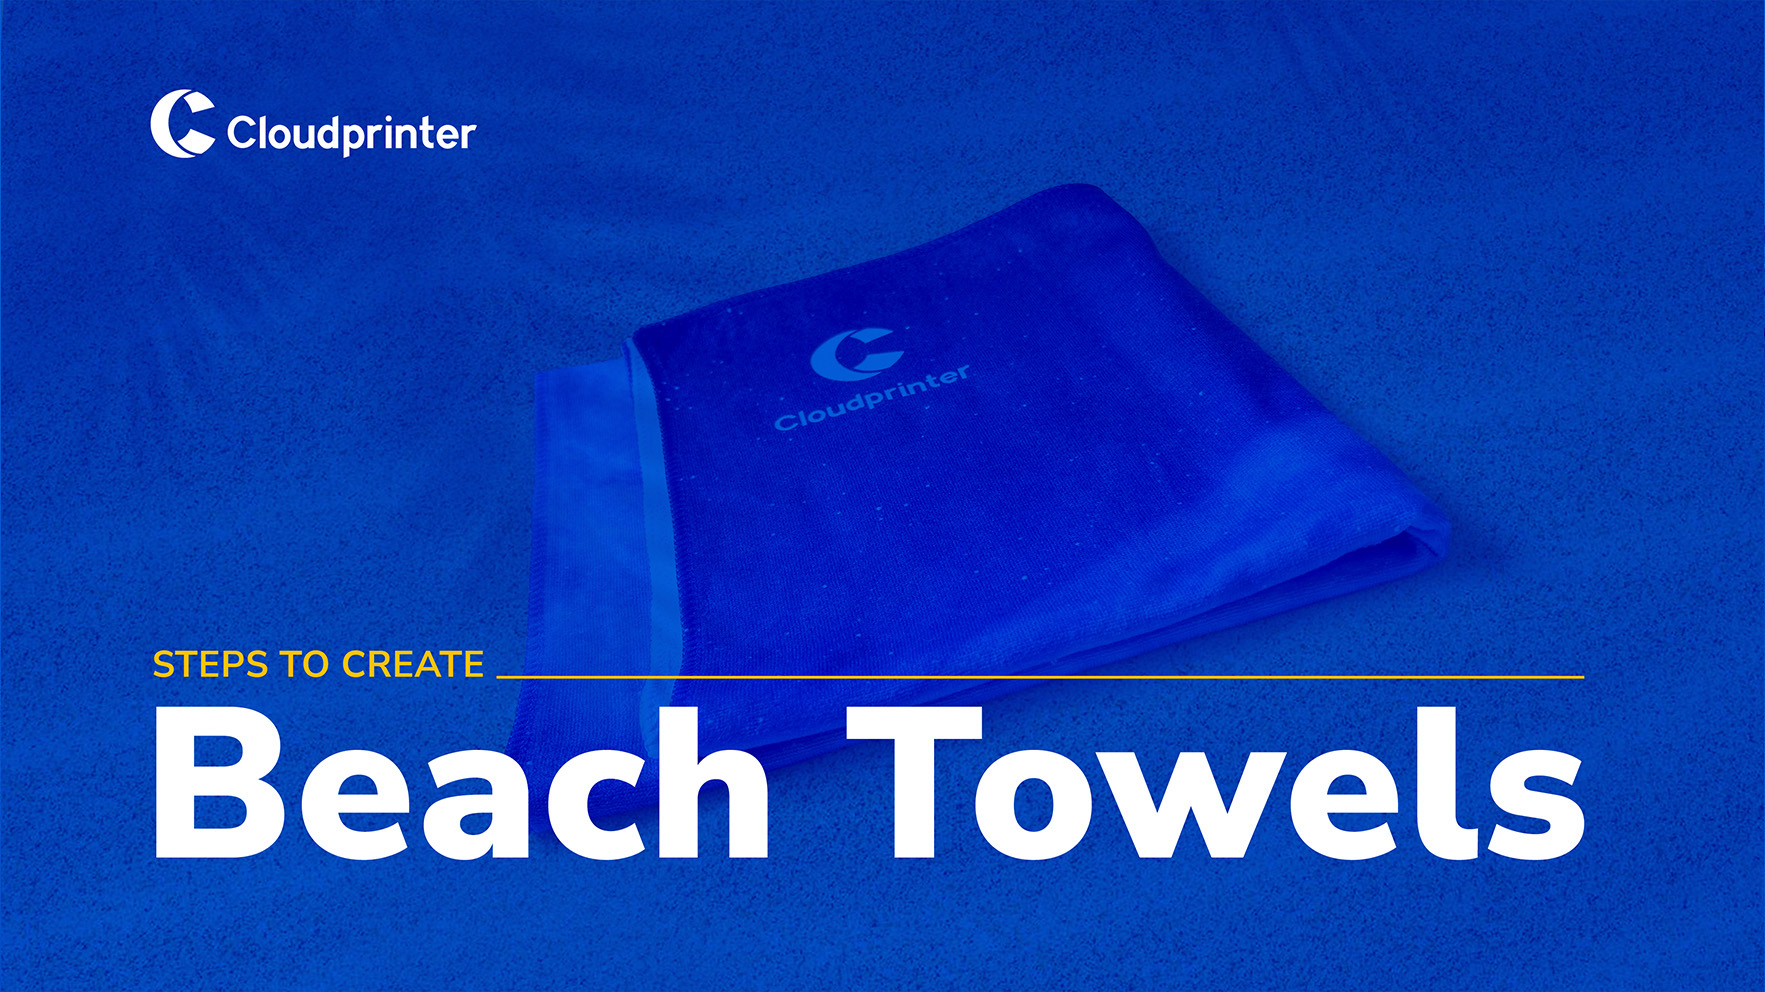 Print custom Beach Towels with Cloudprinter.com